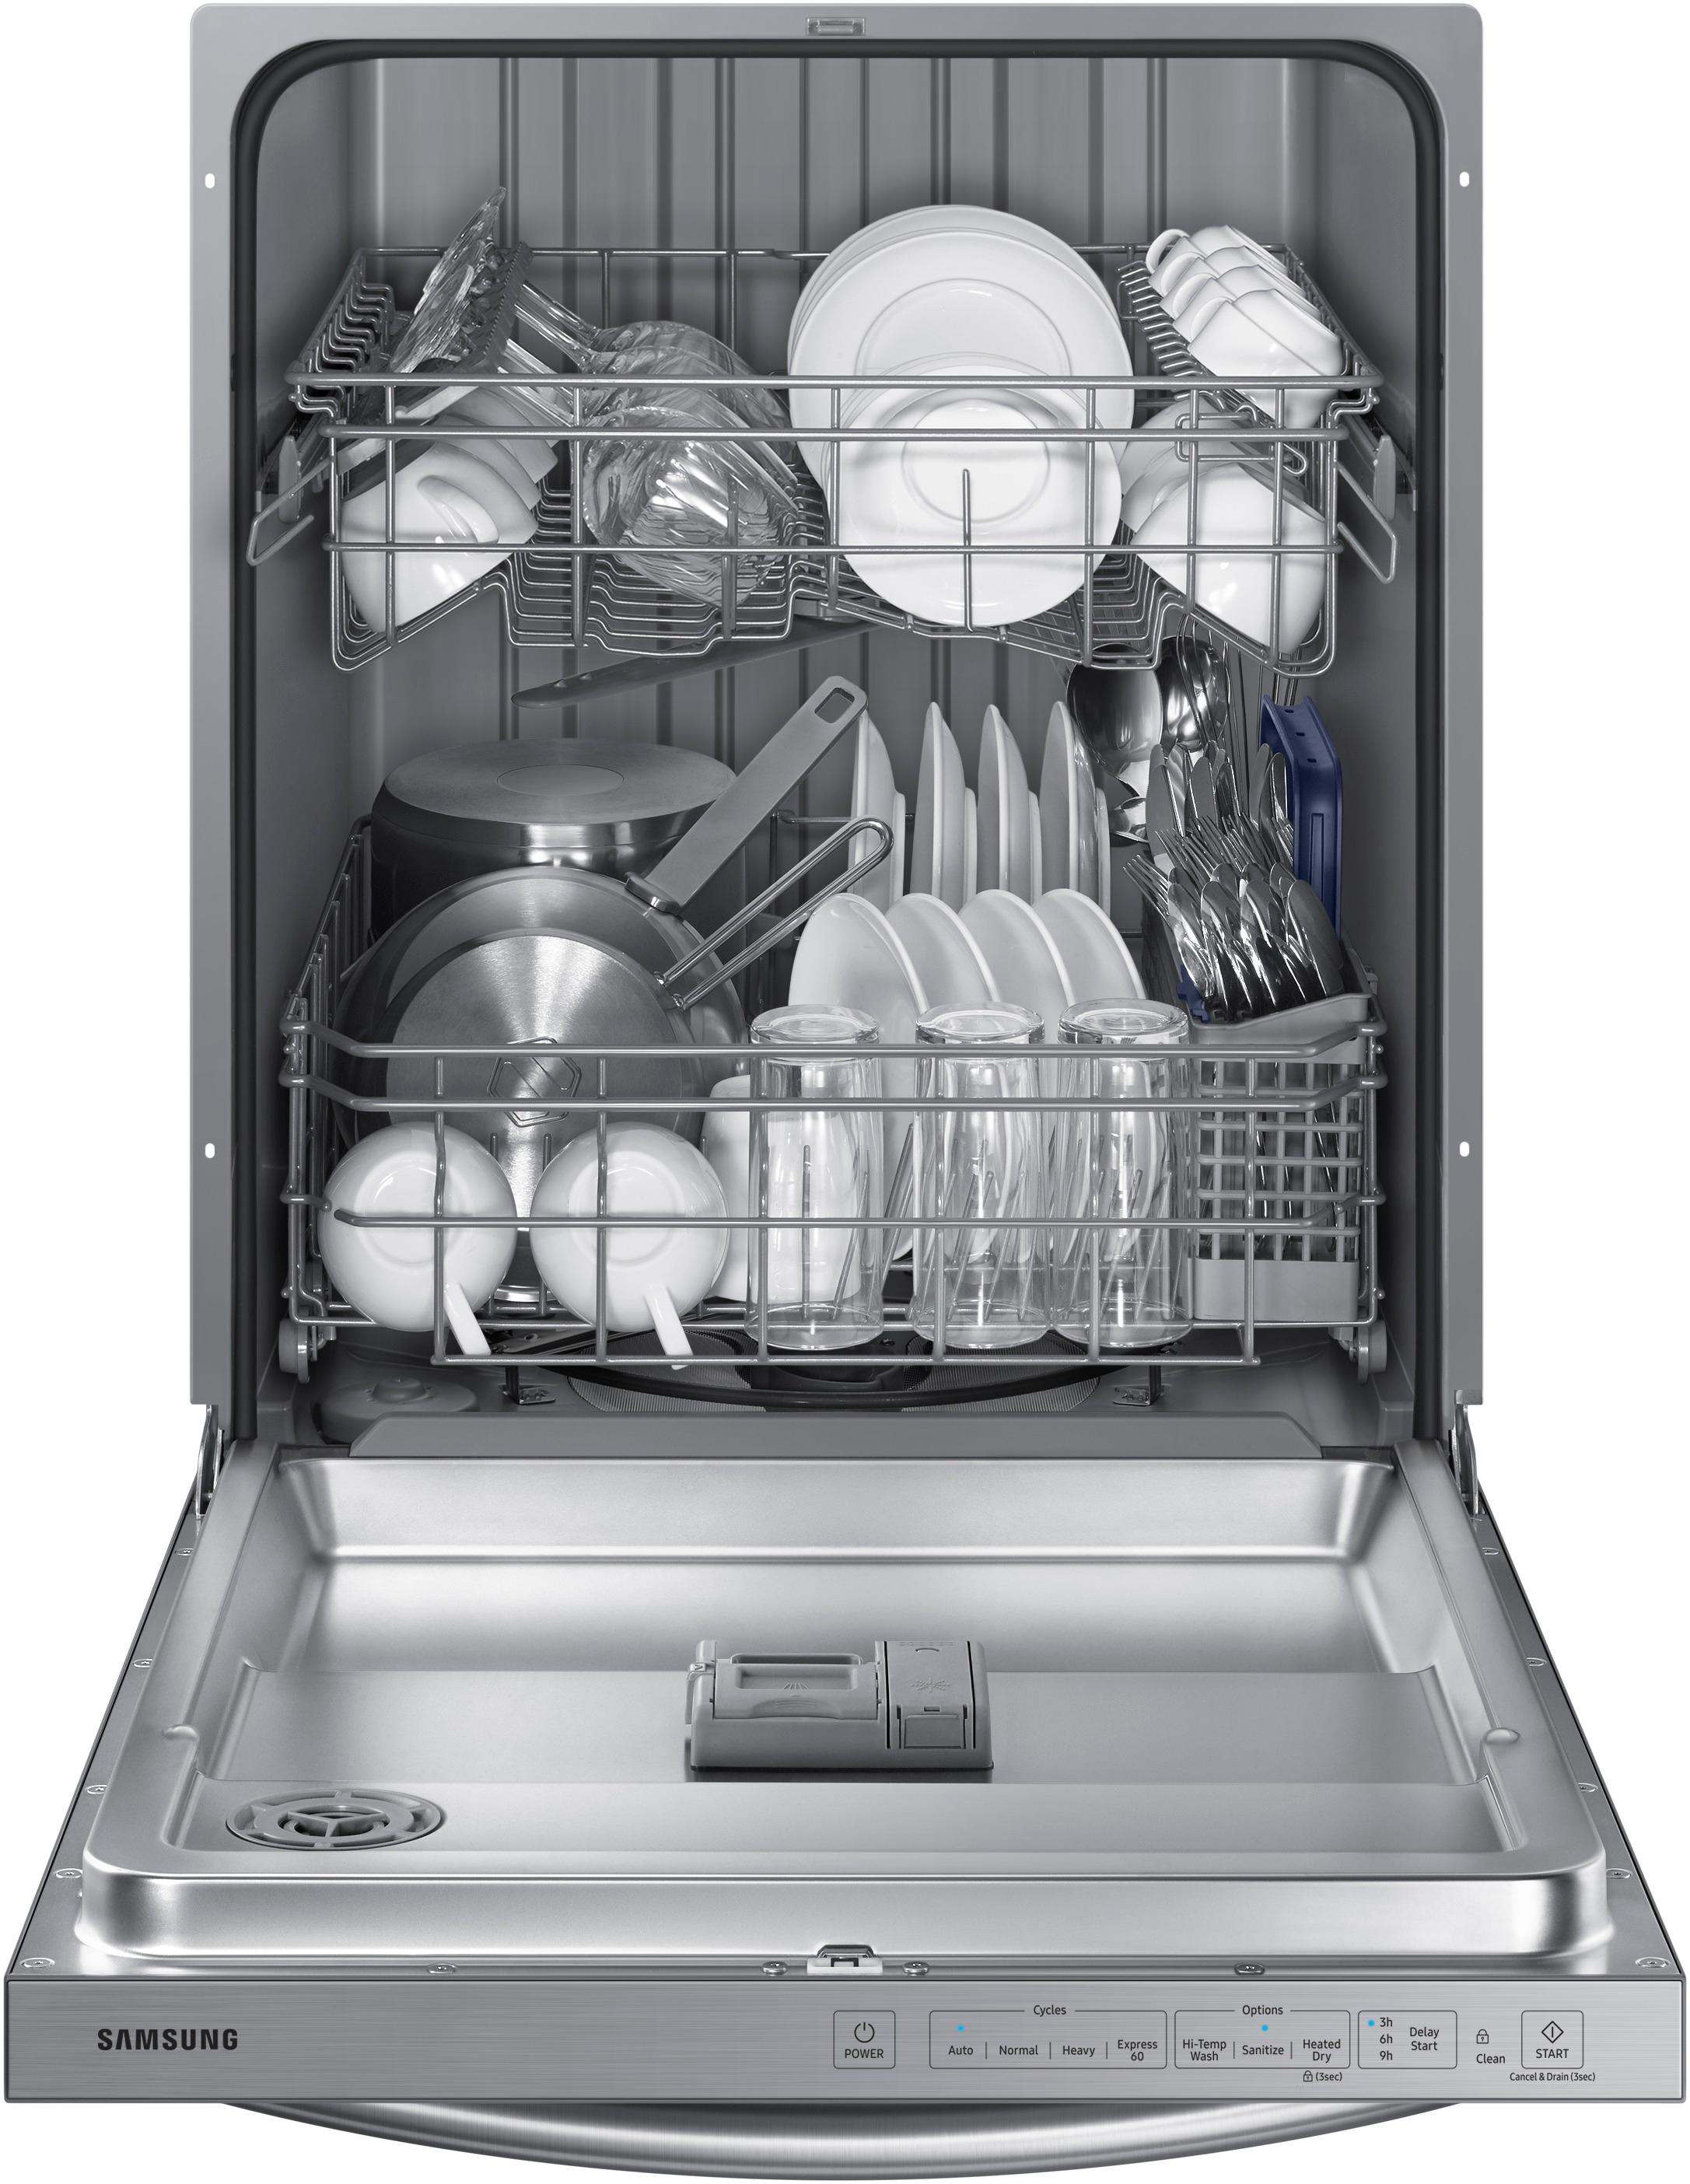 samsung dw80m3021us dishwasher reviews